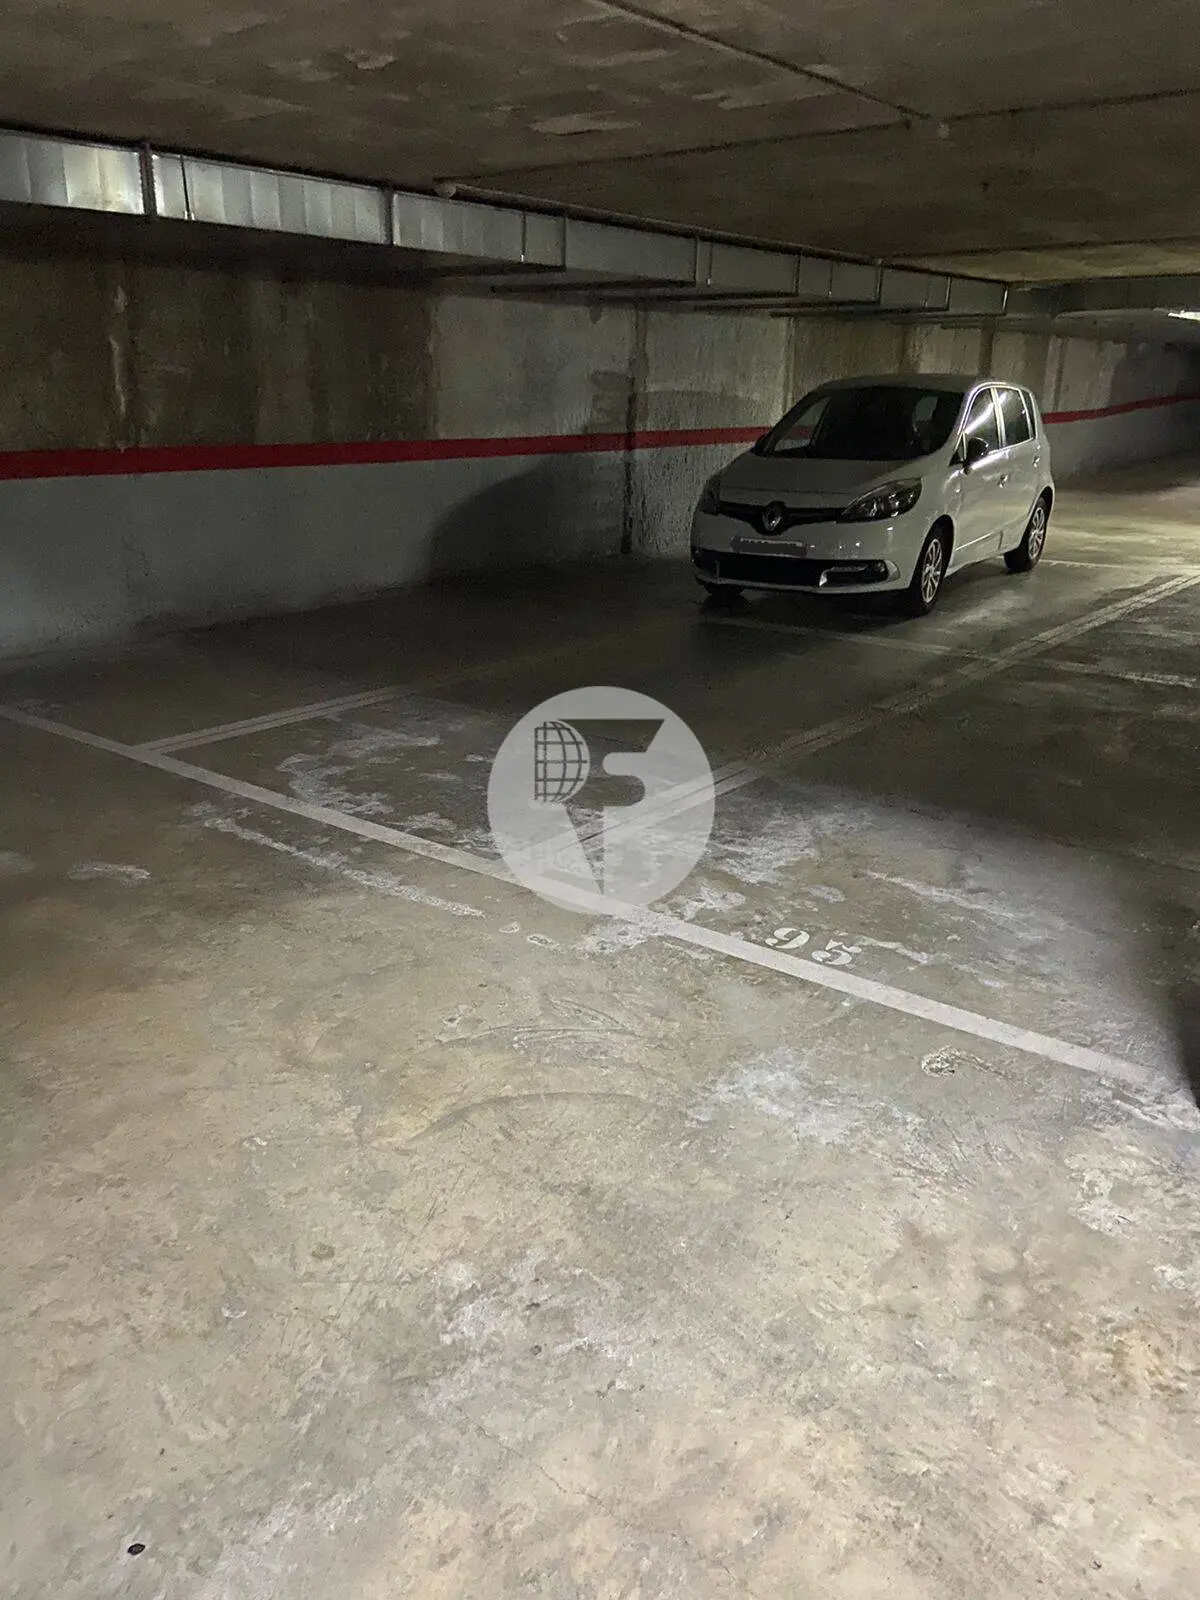 Parking space for sale in Mollet del Vallés in Enric Morera street, Vi